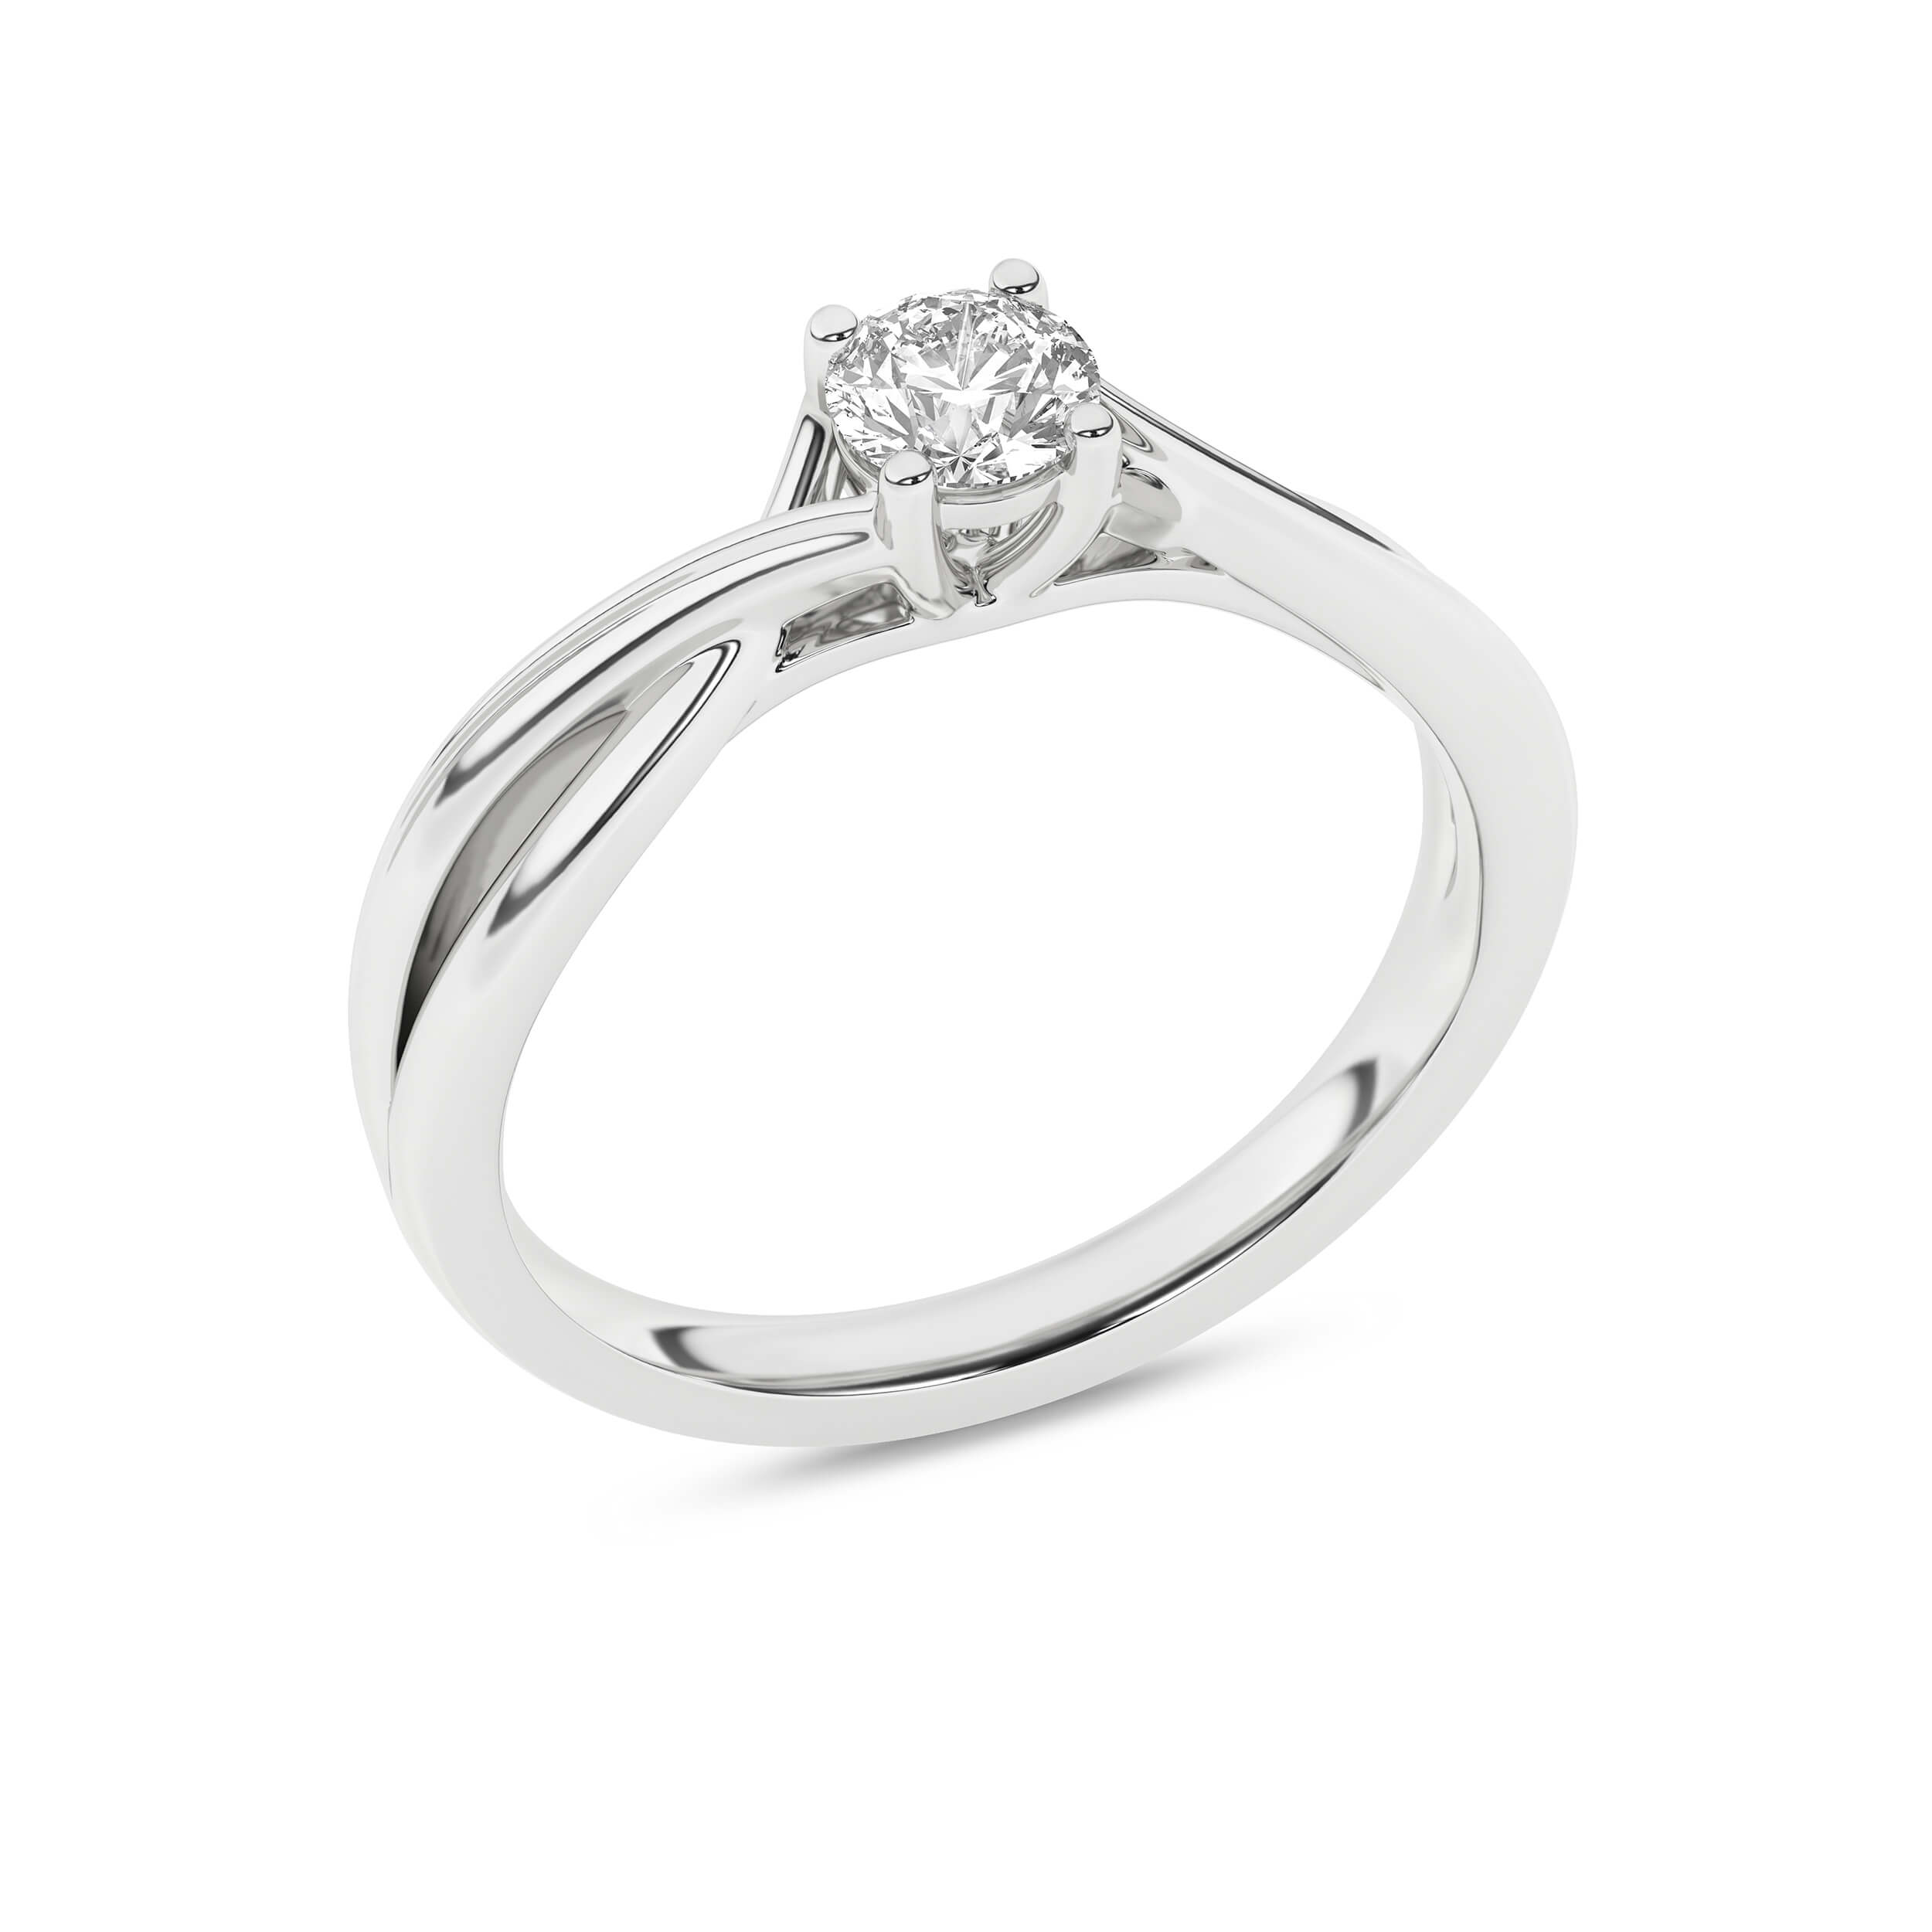 Inel de logodna din Aur Alb 14K cu Diamant 0.33Ct, articol RS1301, previzualizare foto 4